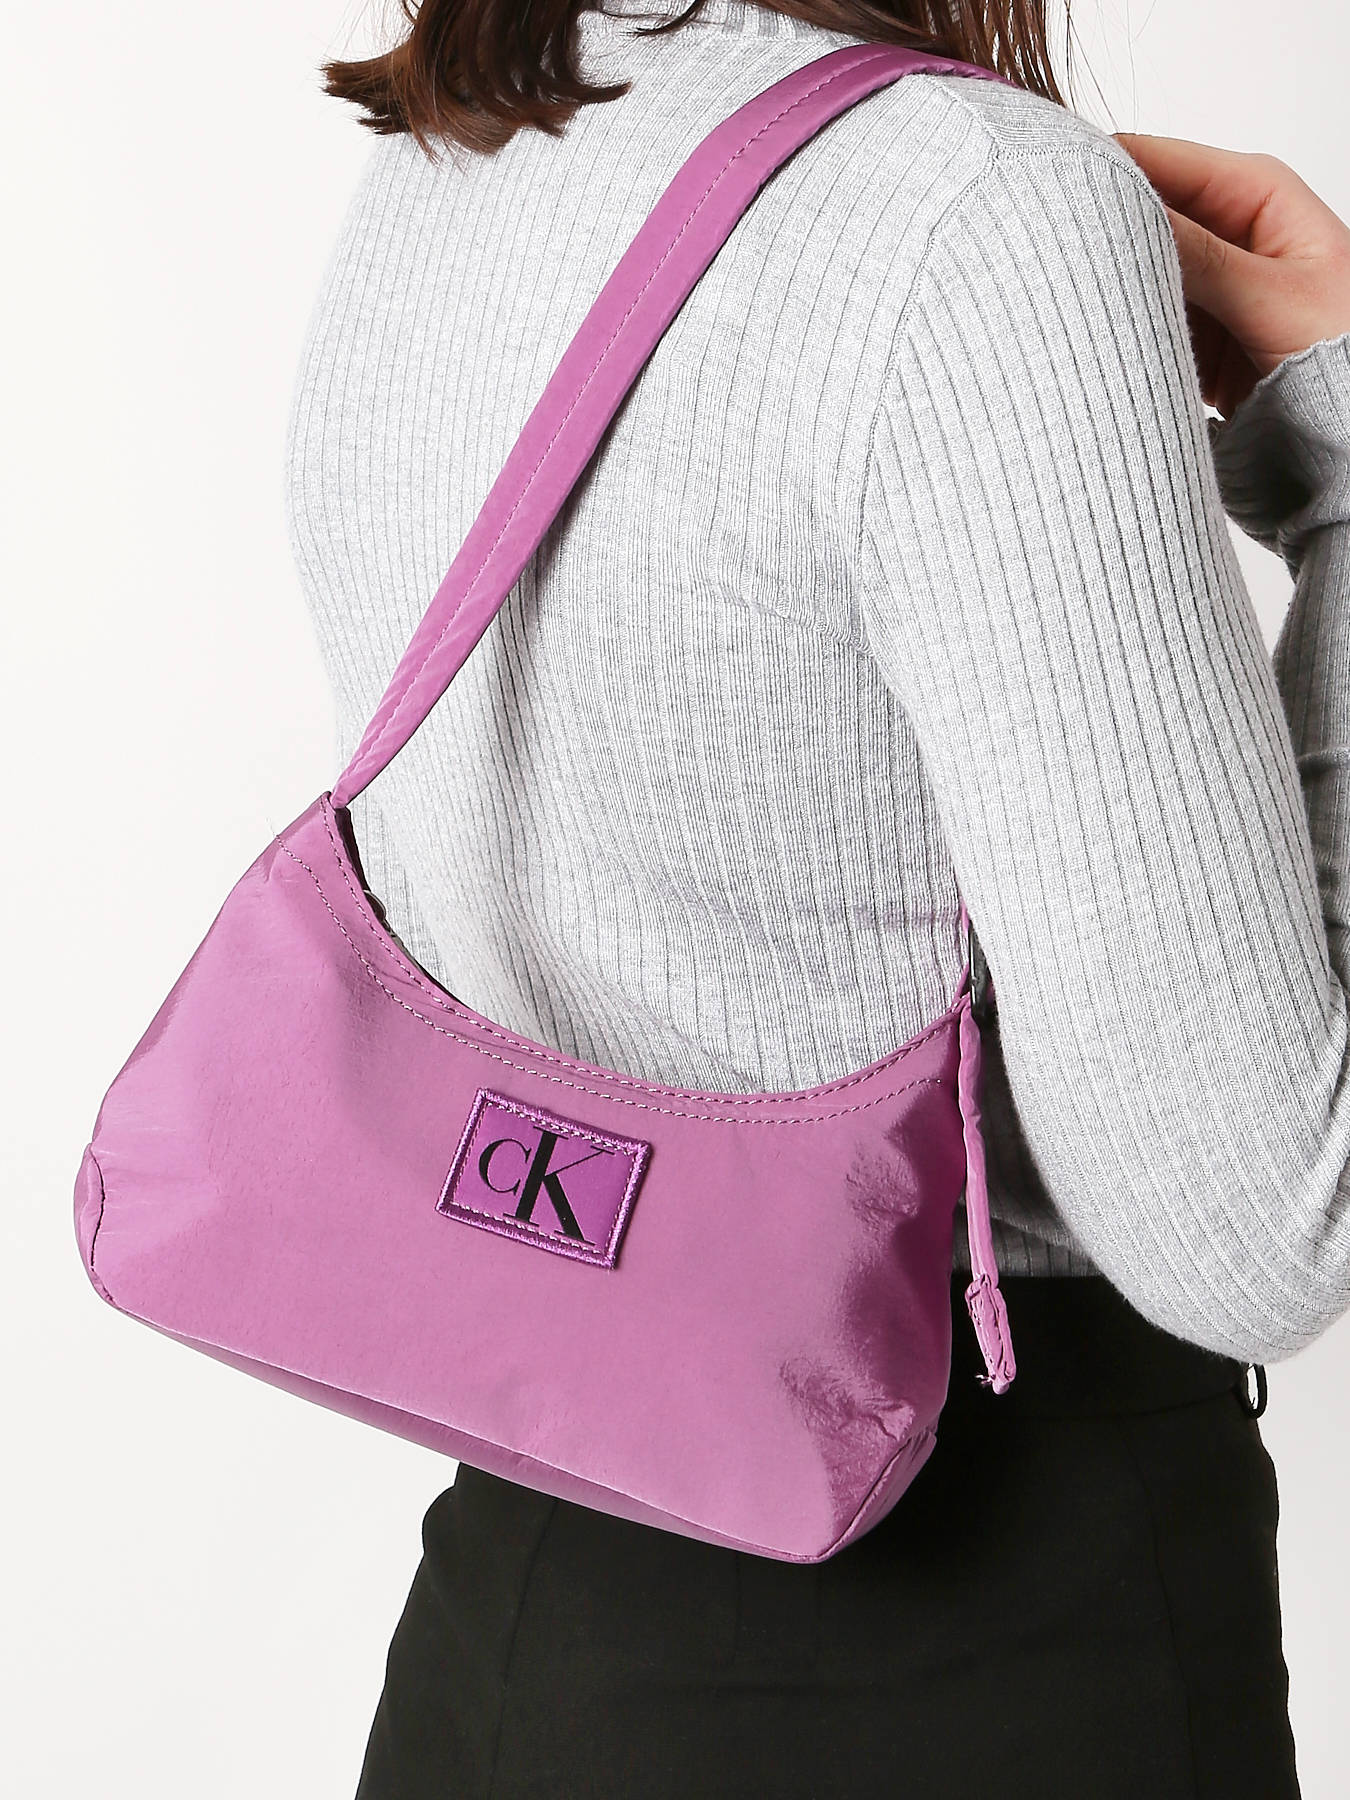 Calvin Klein Re-lock Shoulder Bag - Purple